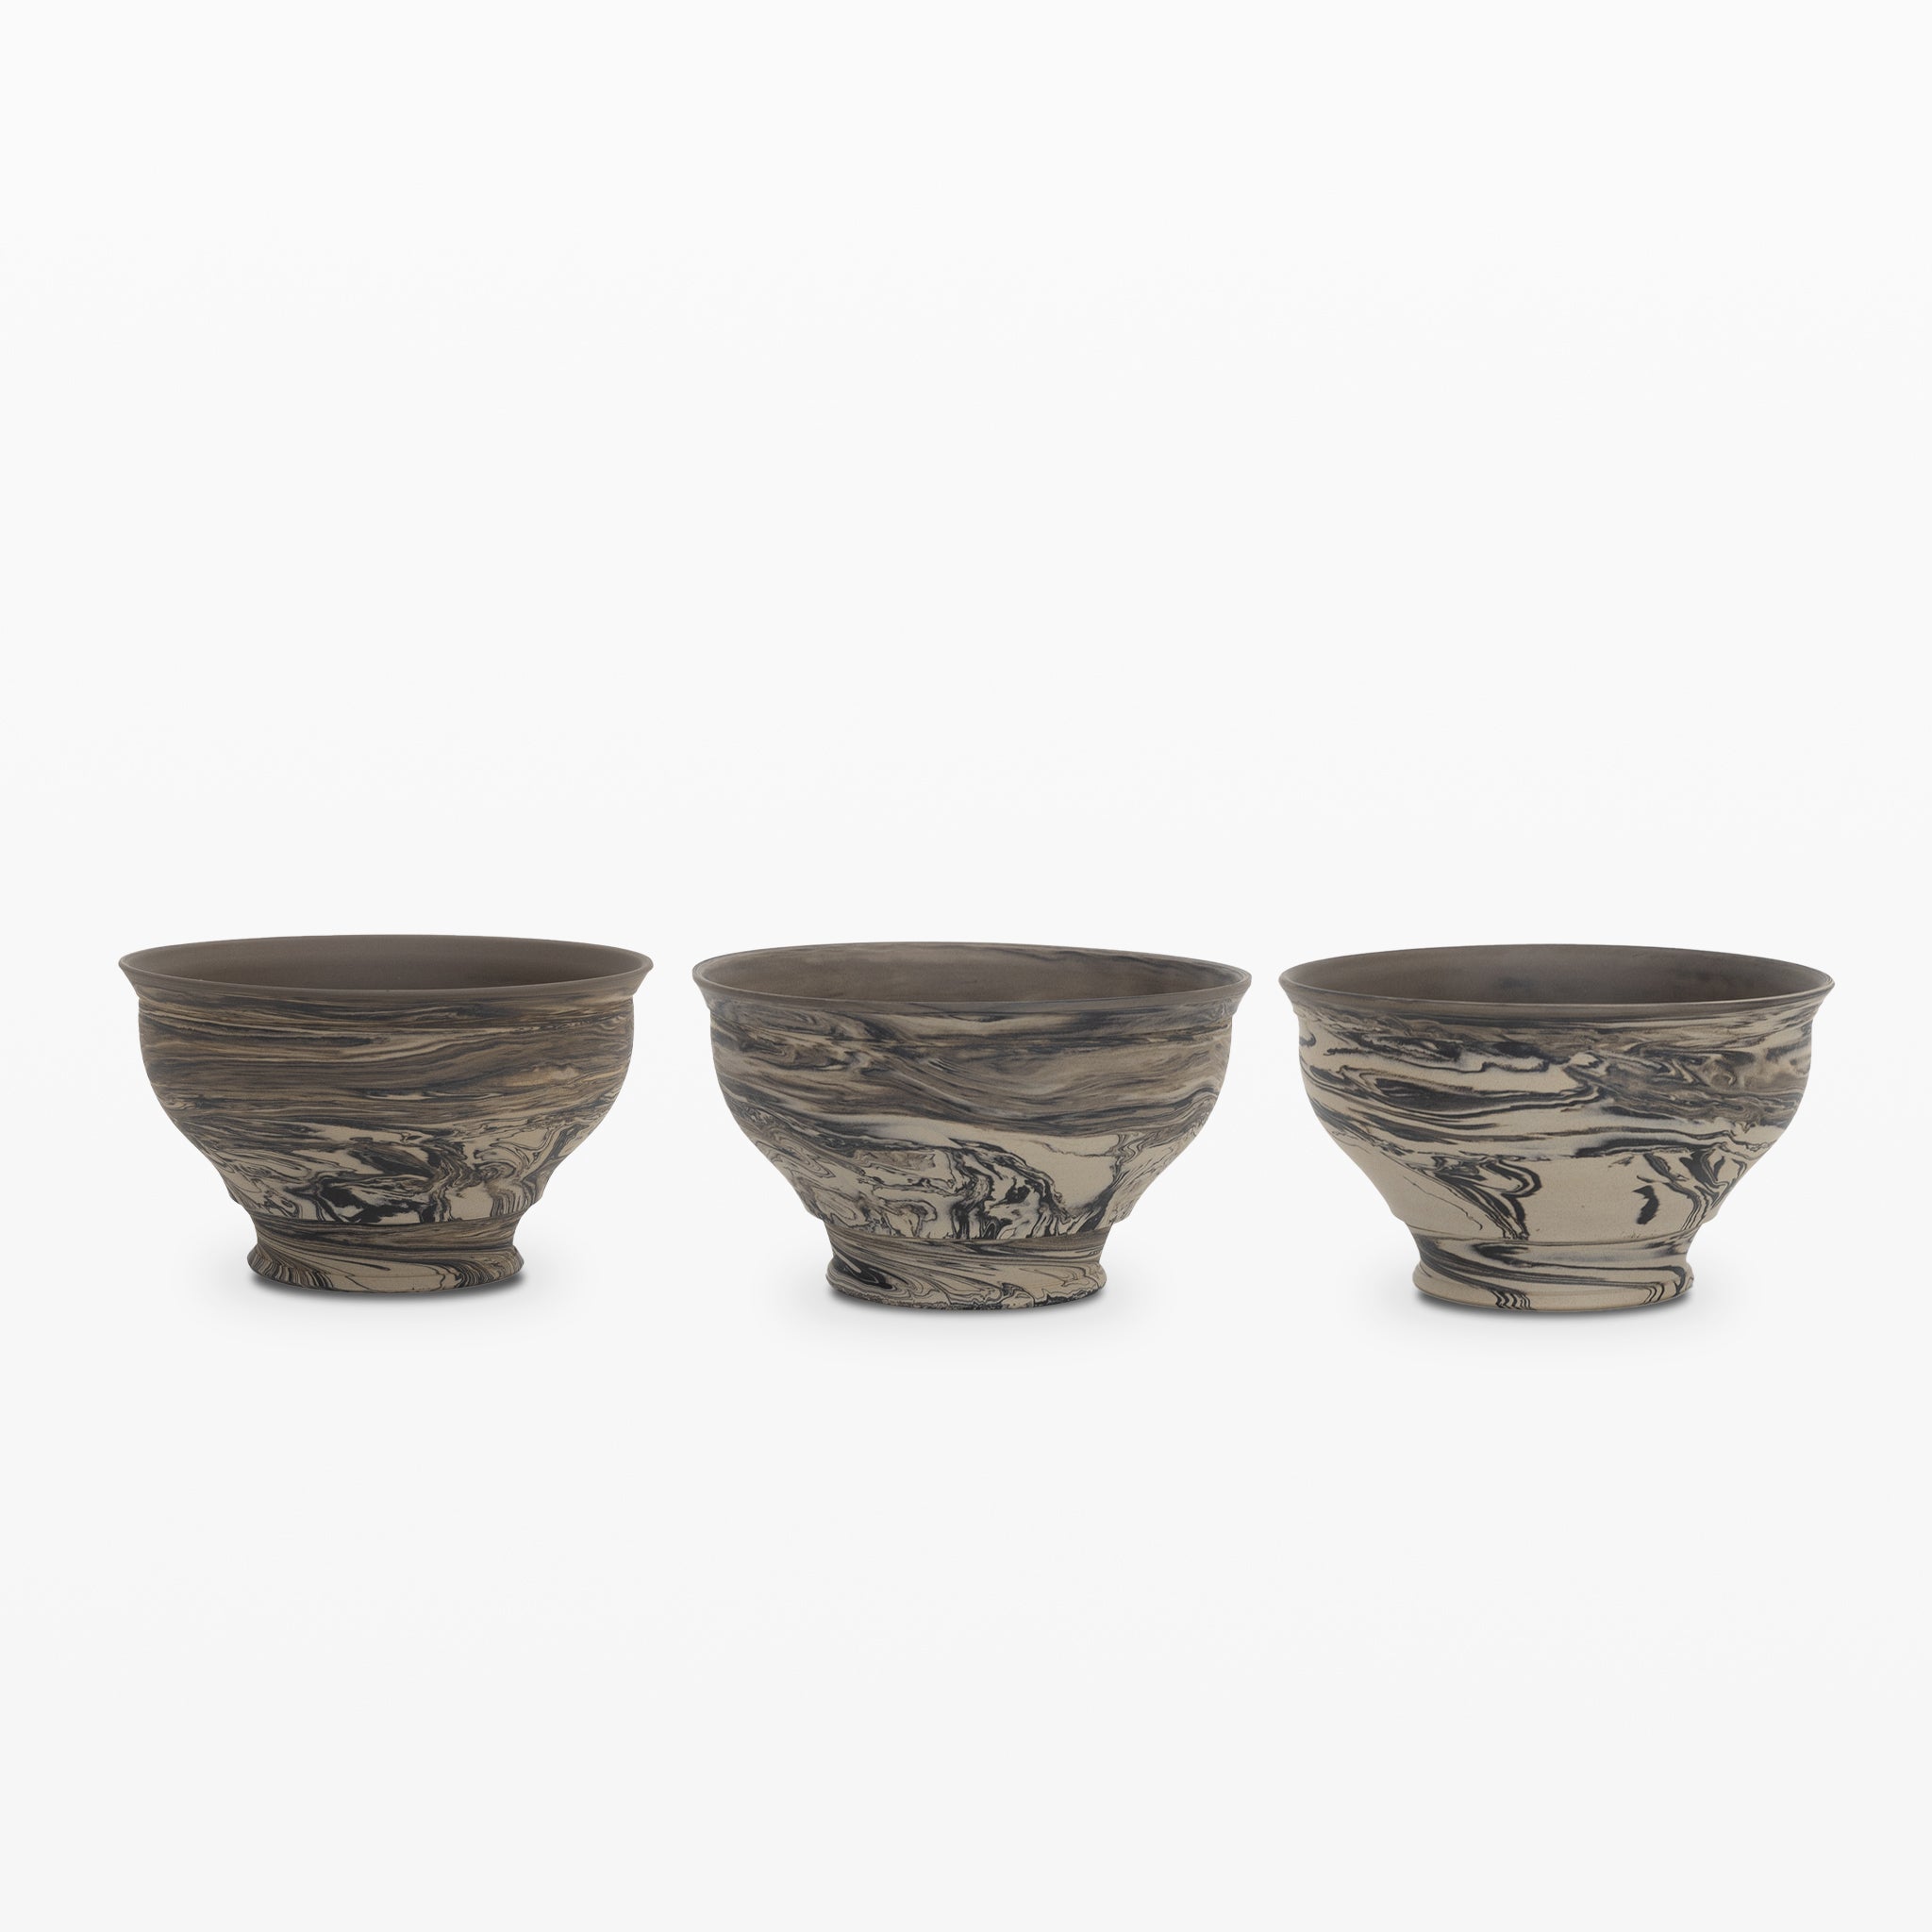 MONKA Plastic Mixing Bowl Set – 6 Stackable Nesting Bowls + 5